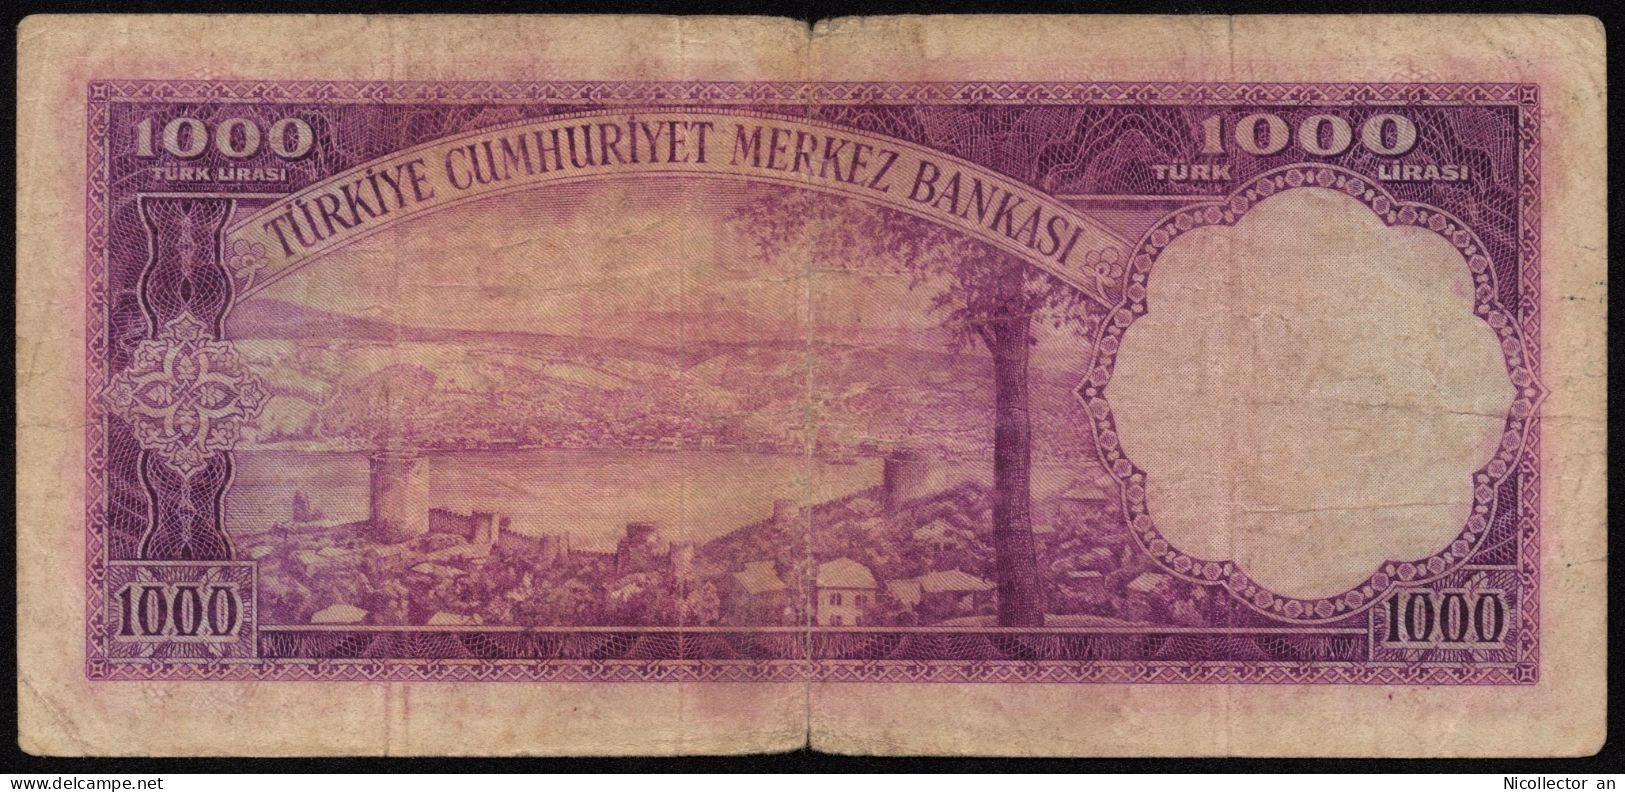 Turkey, 1.000 Lira, 1953, P-172, FINE Rare Banknote - Turquie